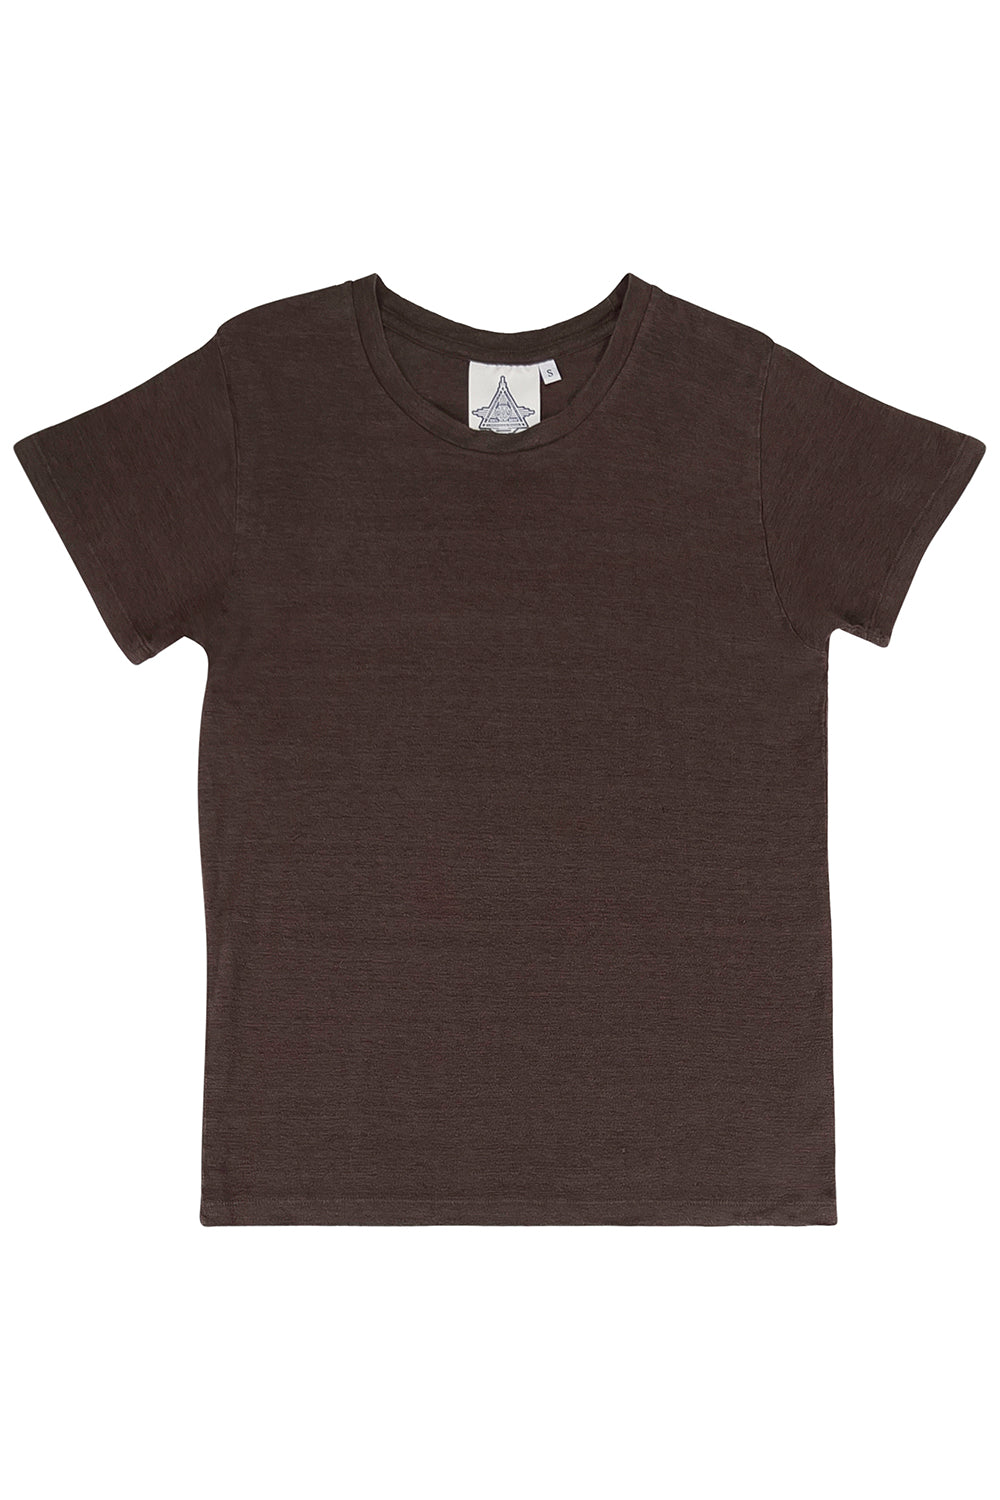 Madison 100% Hemp Tee | Jungmaven Hemp Clothing & Accessories / Color: Coffee Bean